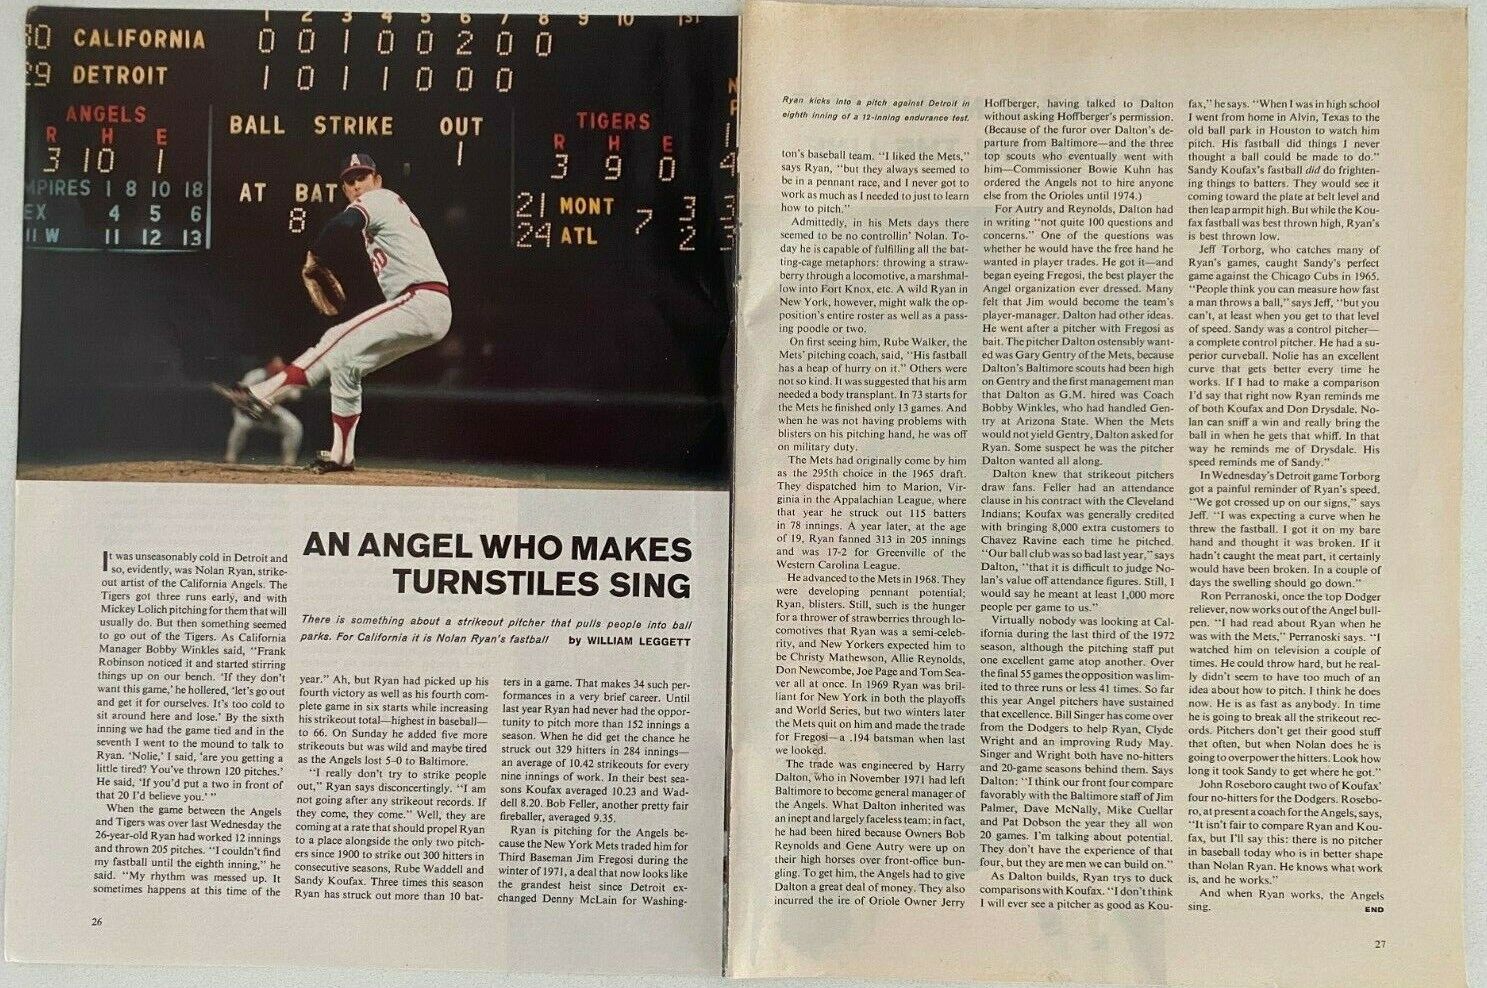 Nolan Ryan's Fastball California Angels Vintage 1973 Magazine Photo